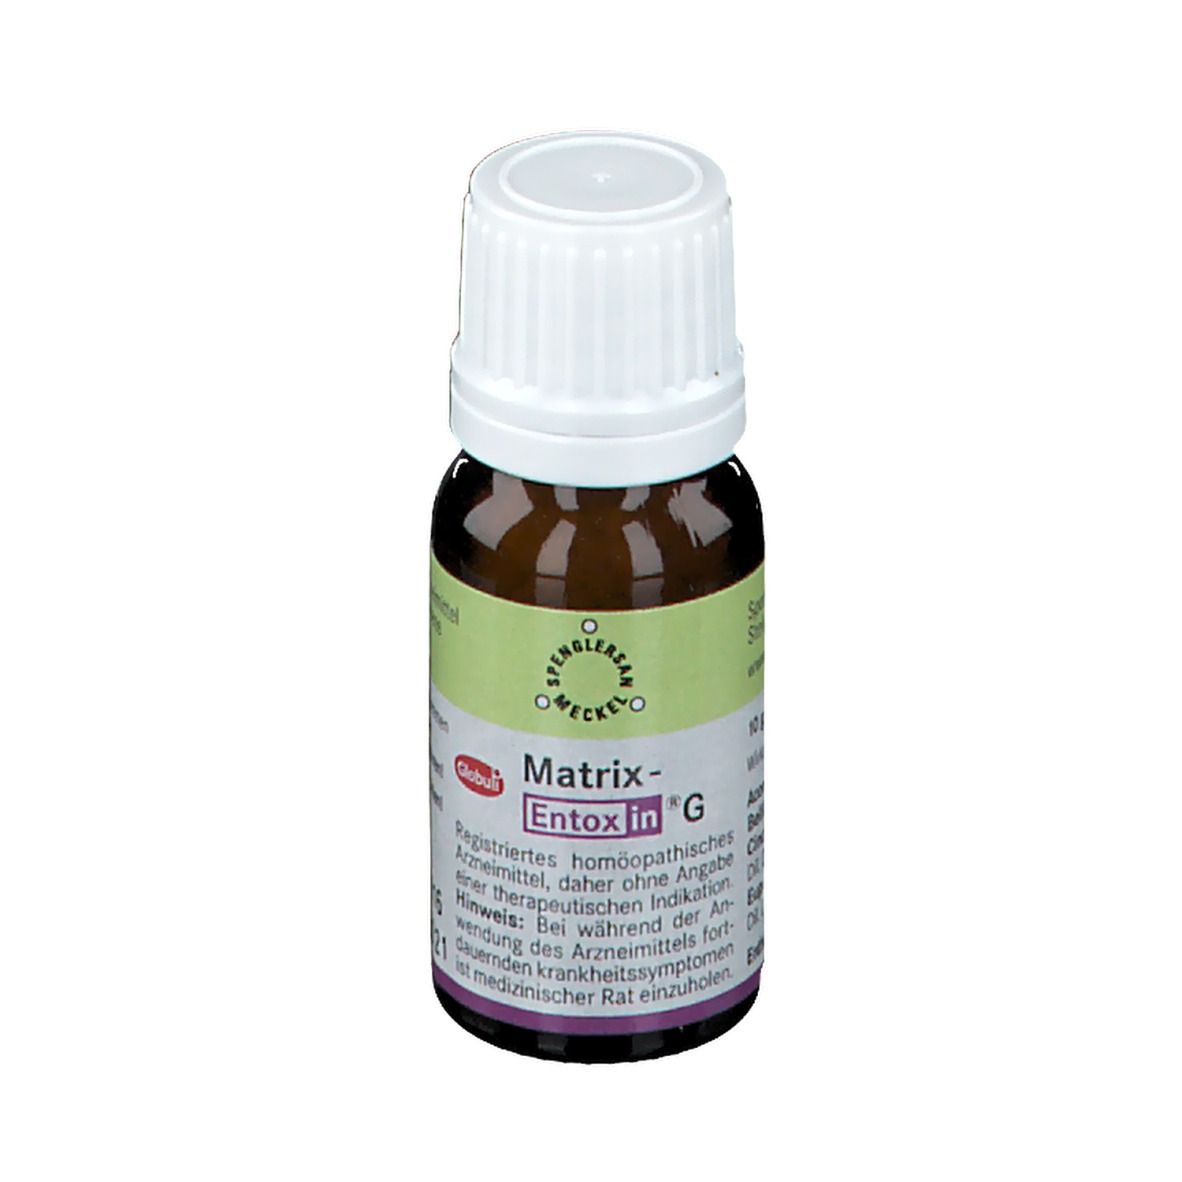 Matrix-Entoxin® G